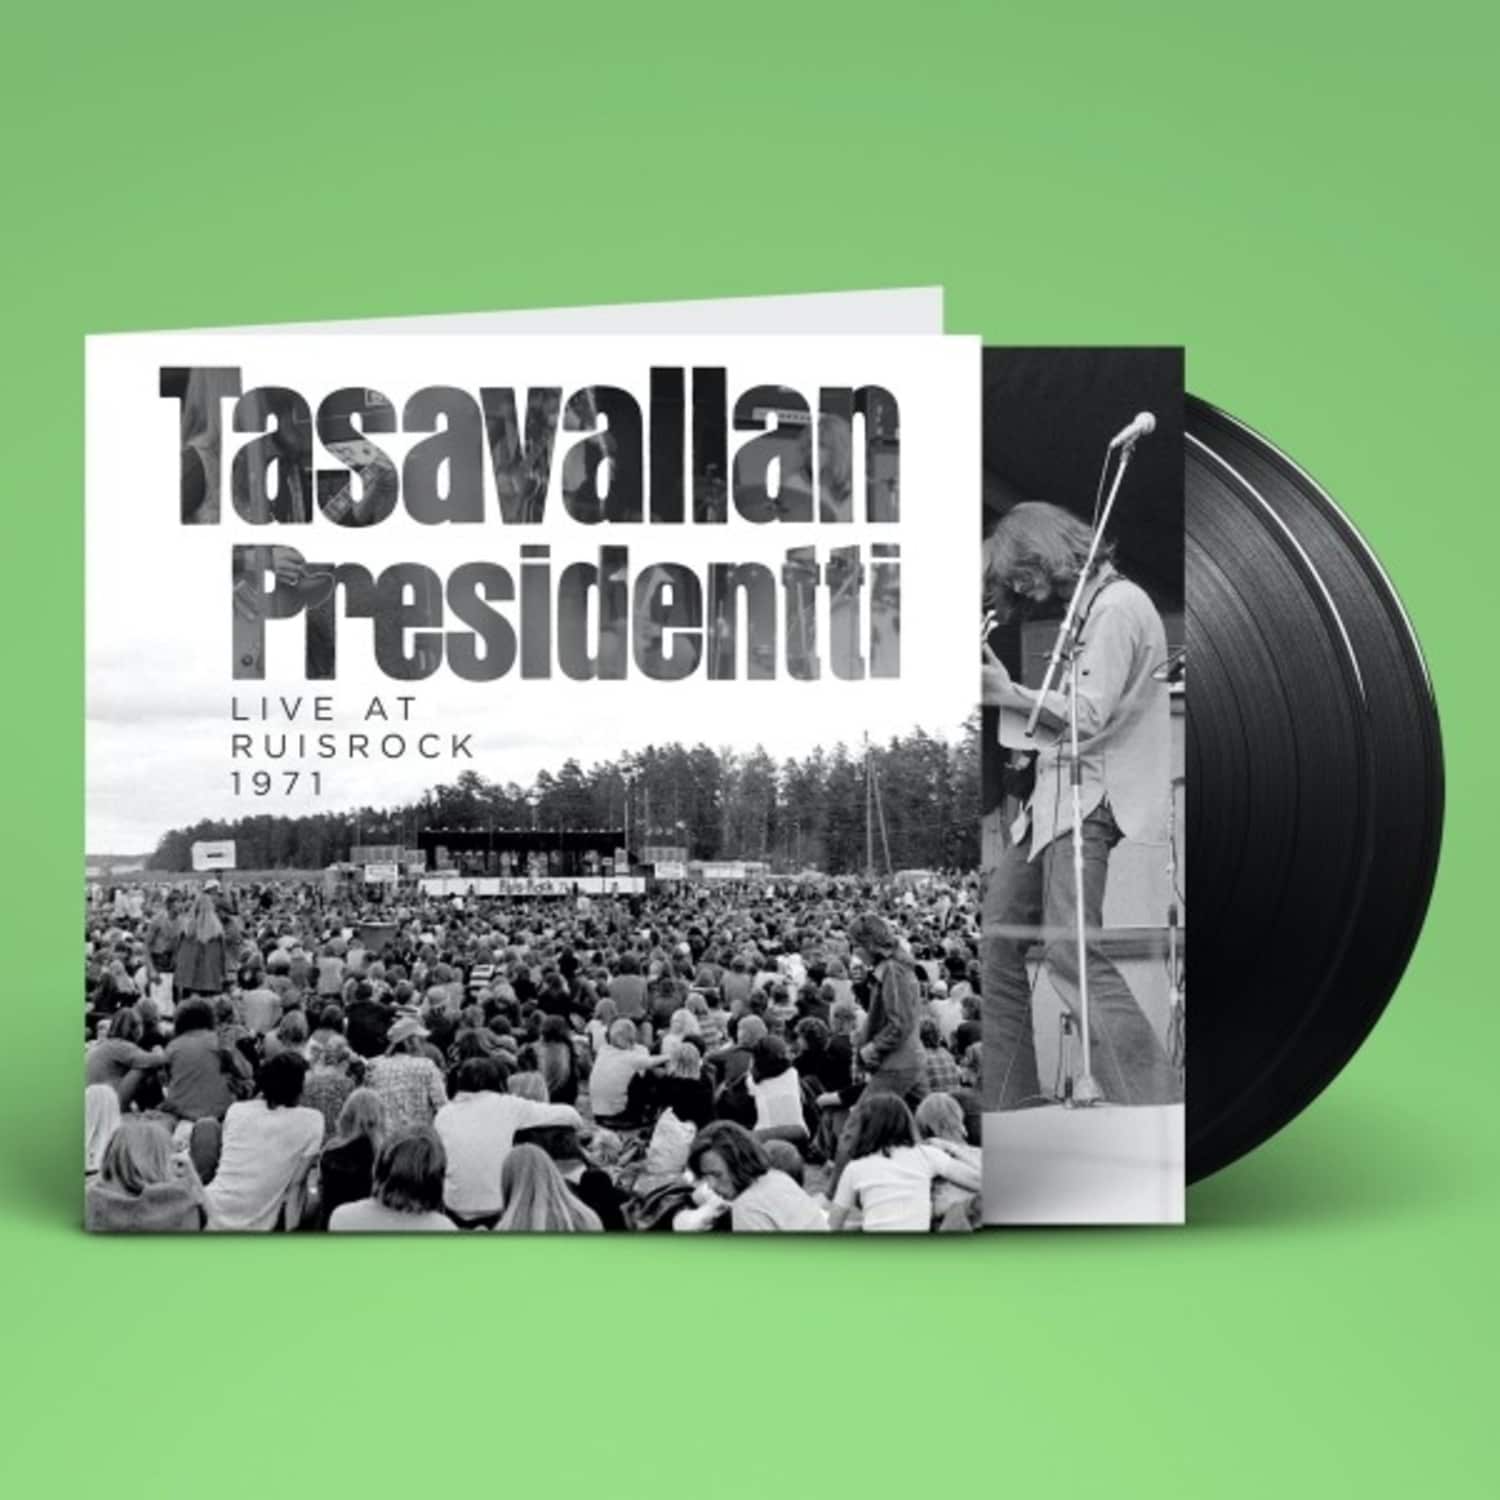 Tasavallan Presidentti - LIVE AT RUISROCK 1971 